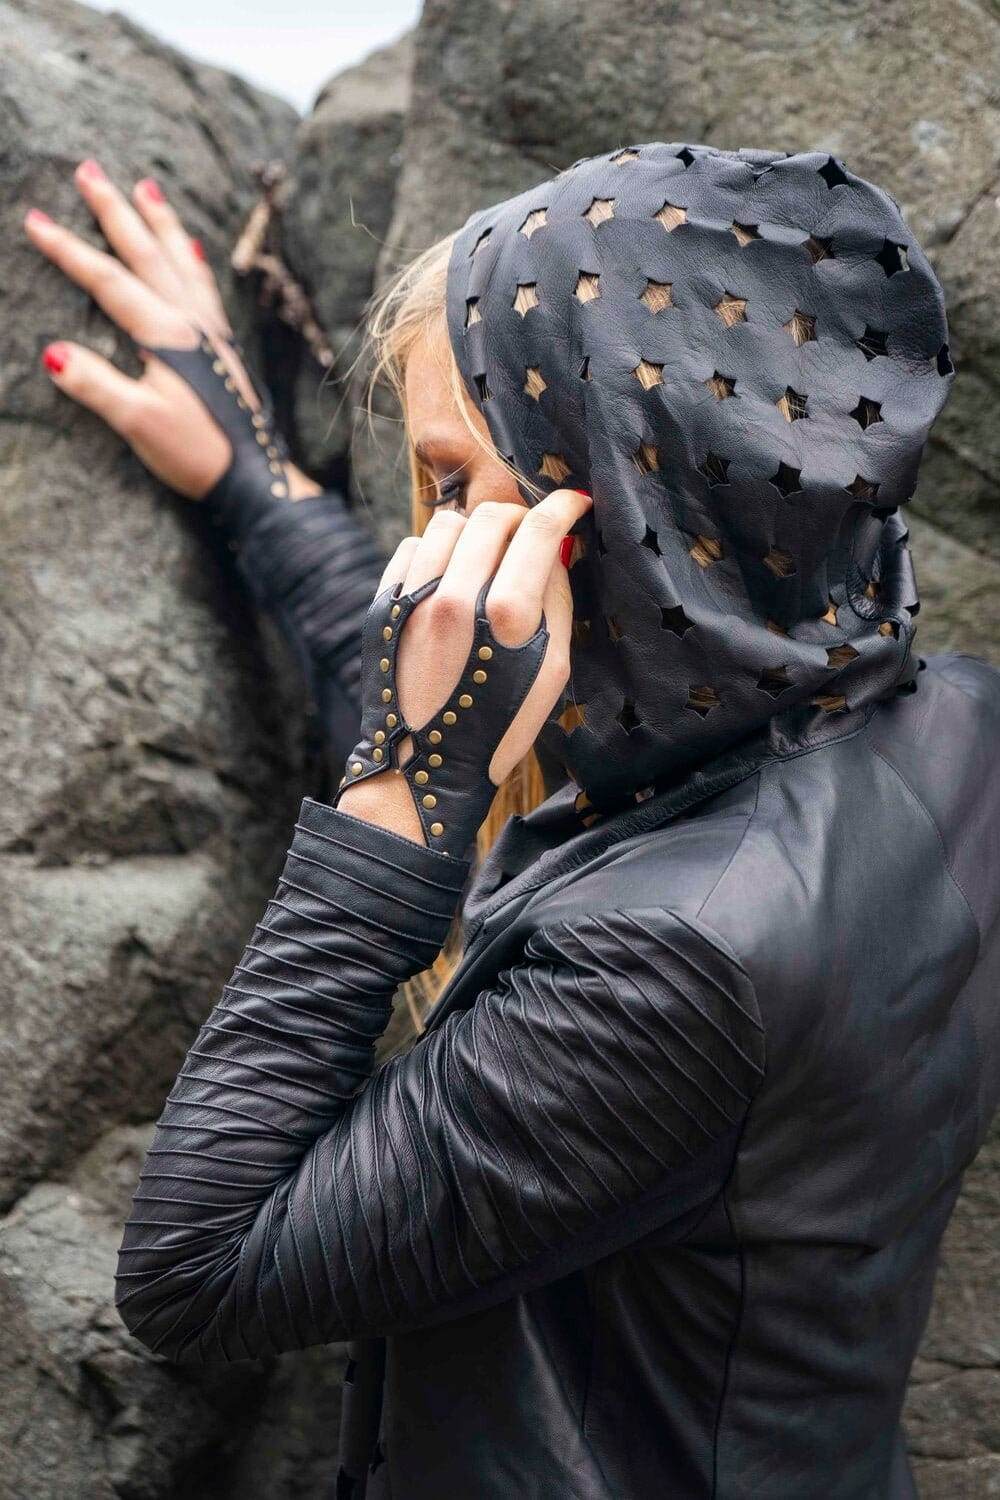 Womens Fingerless Leather Gloves by Love Khaos